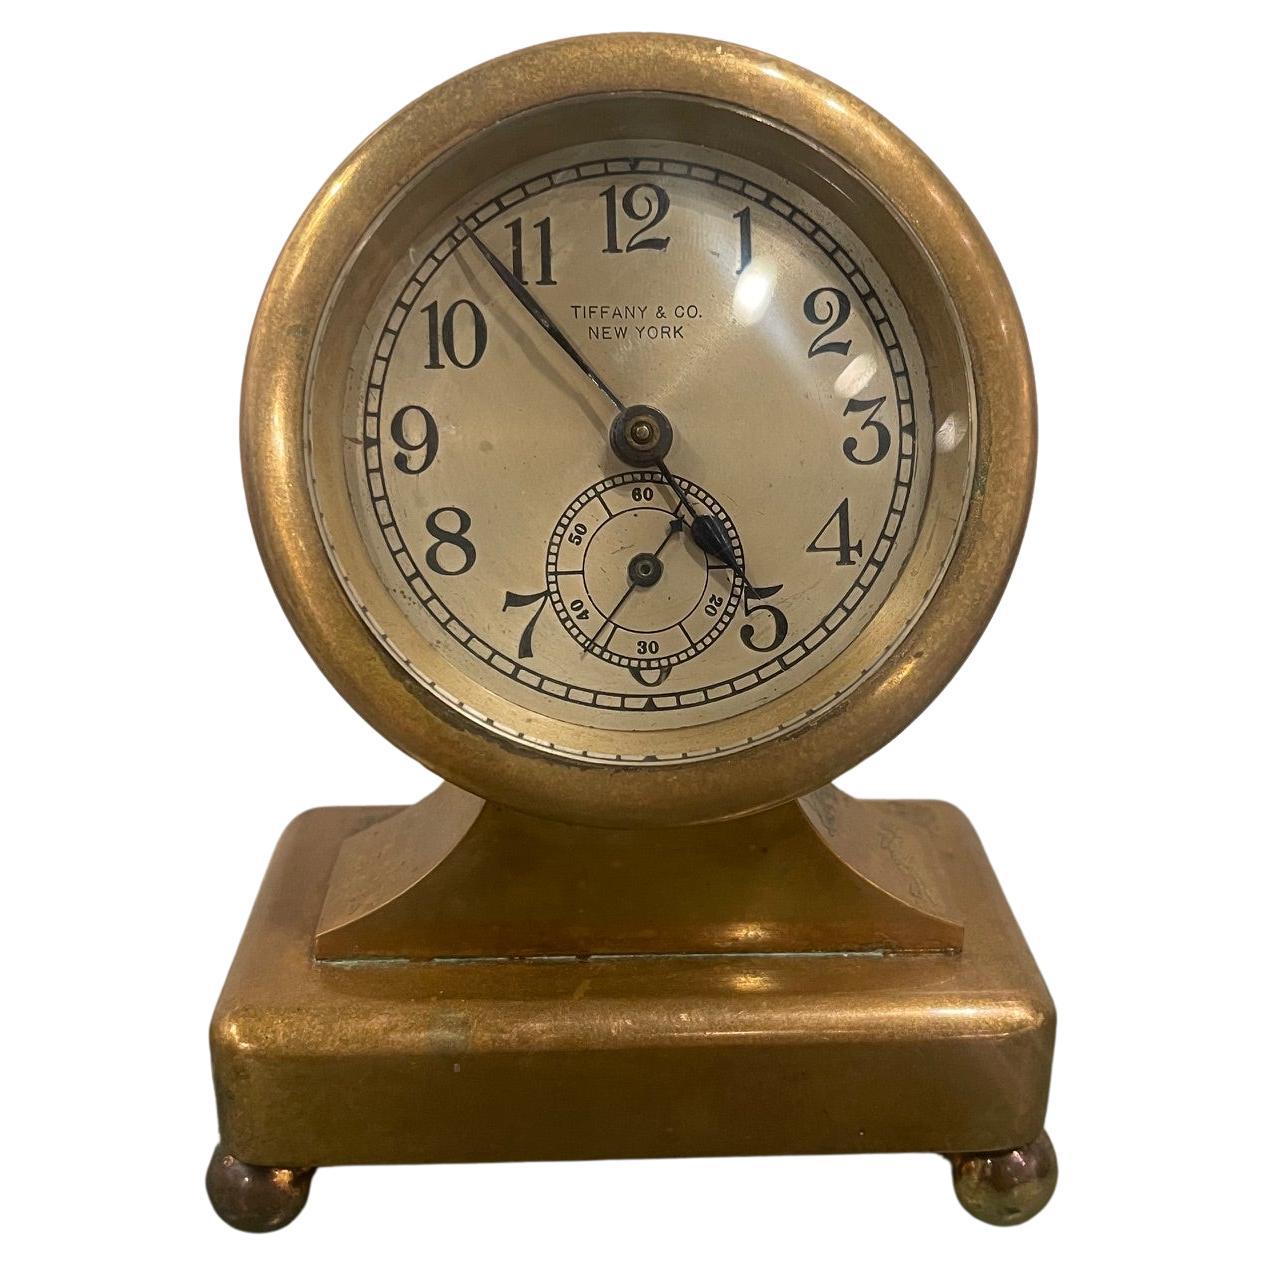 Tiffany & Co. Horloge de bureau en bronze, Début du 20e siècle